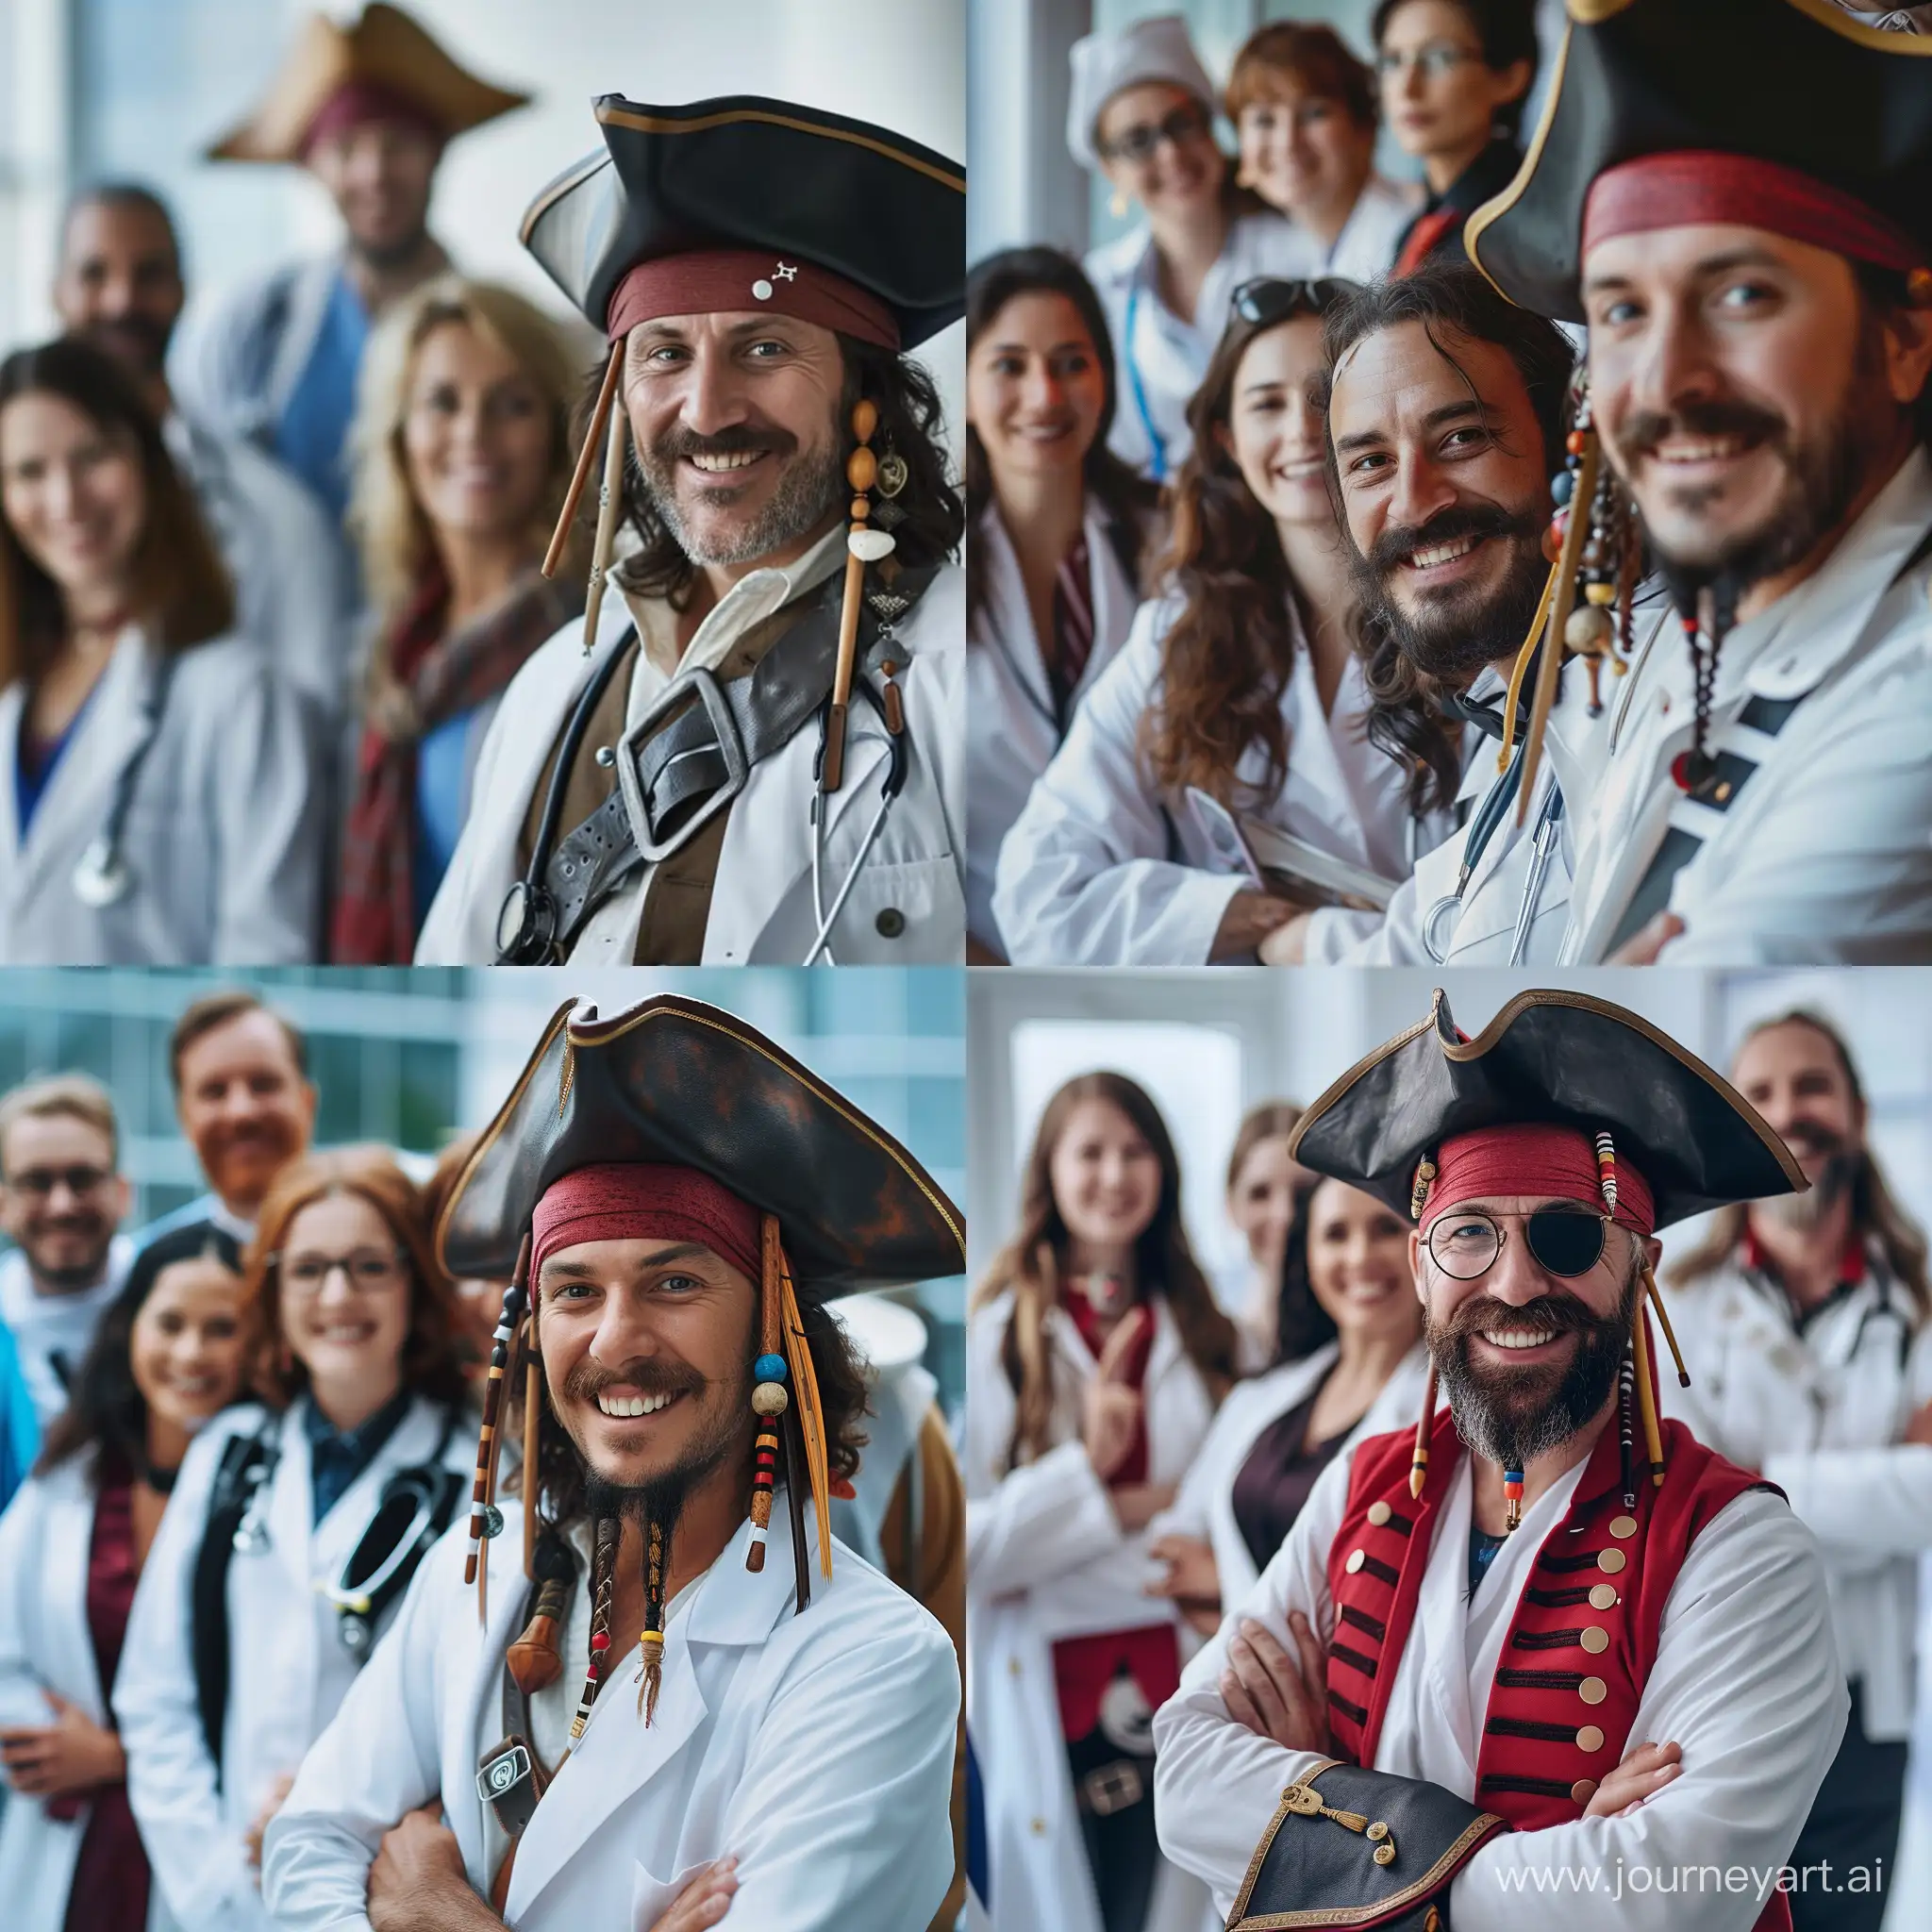 Joyful-Psychologists-in-Pirate-Costume-Group-Portrait